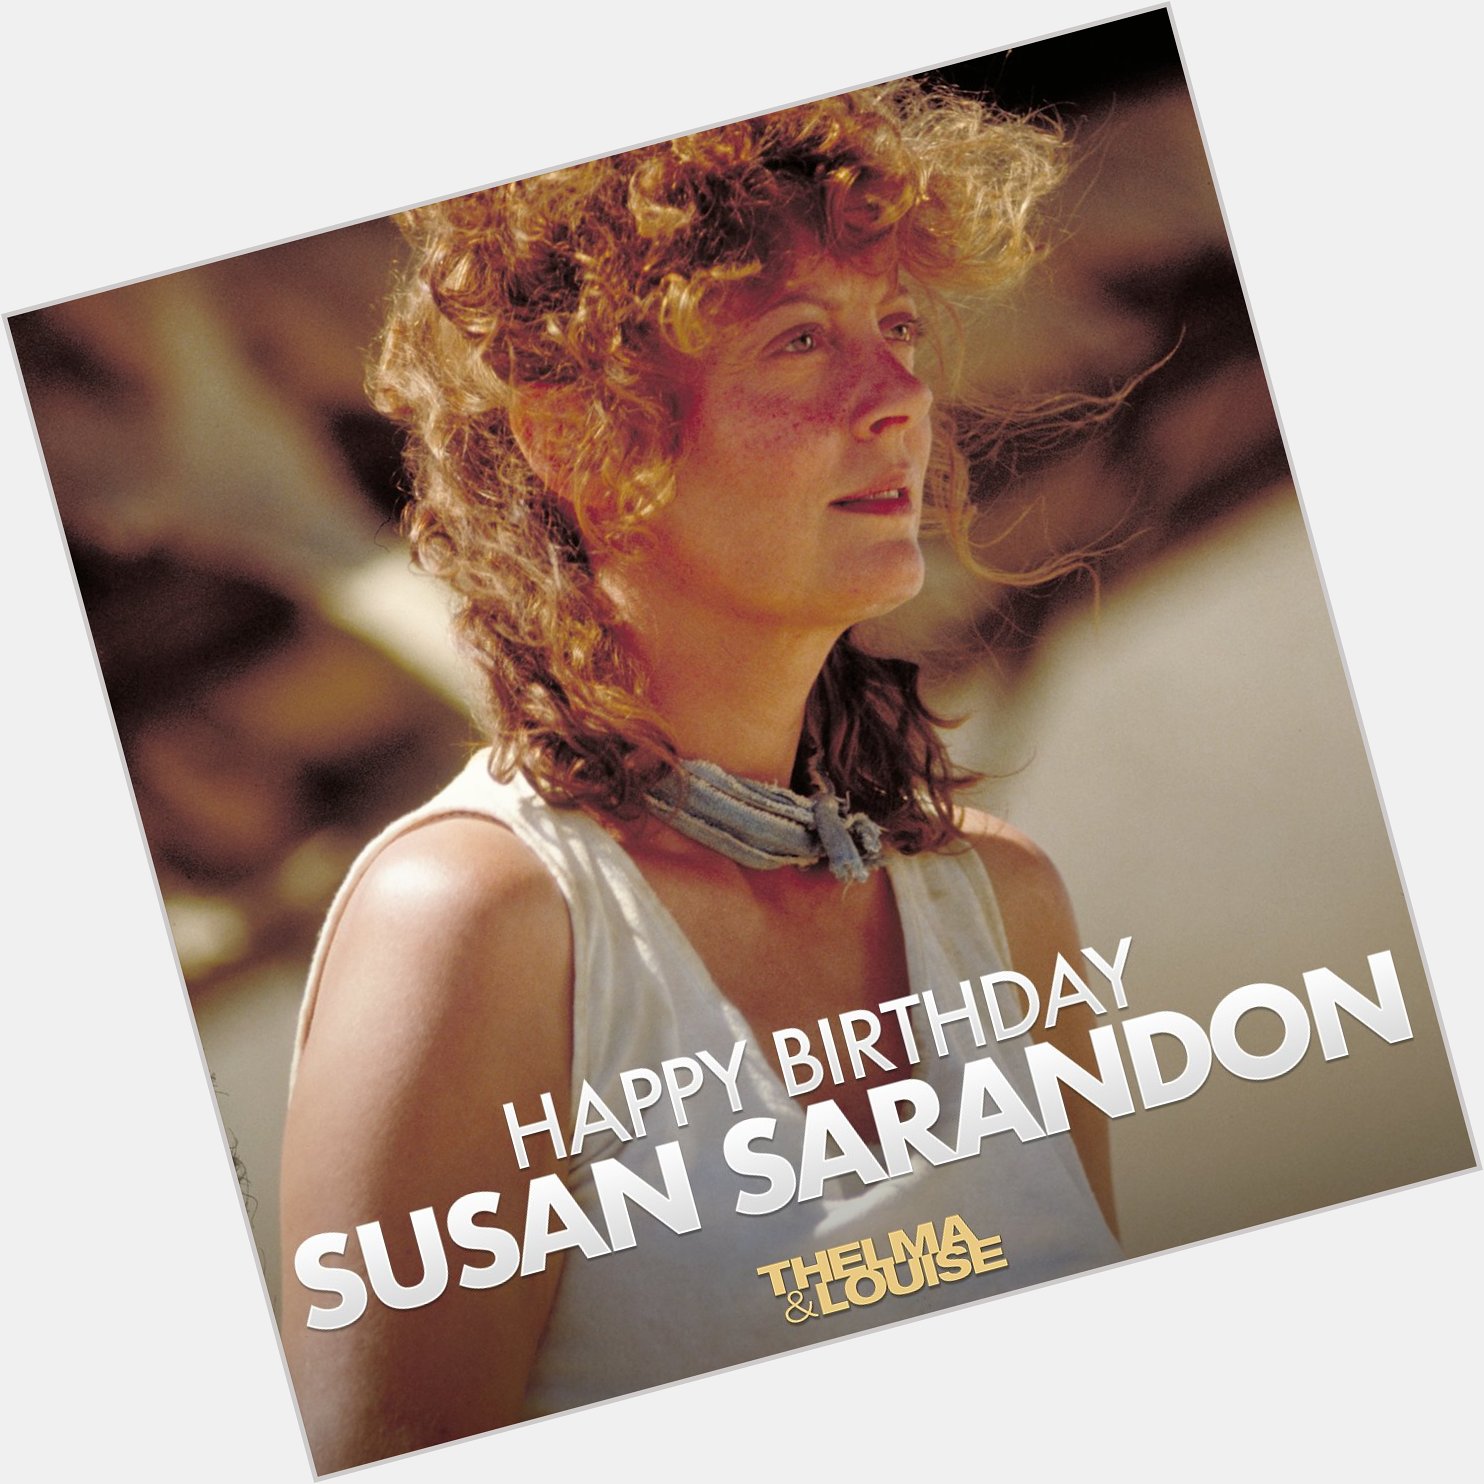 Wish Susan Sarandon a very happy birthday today! 